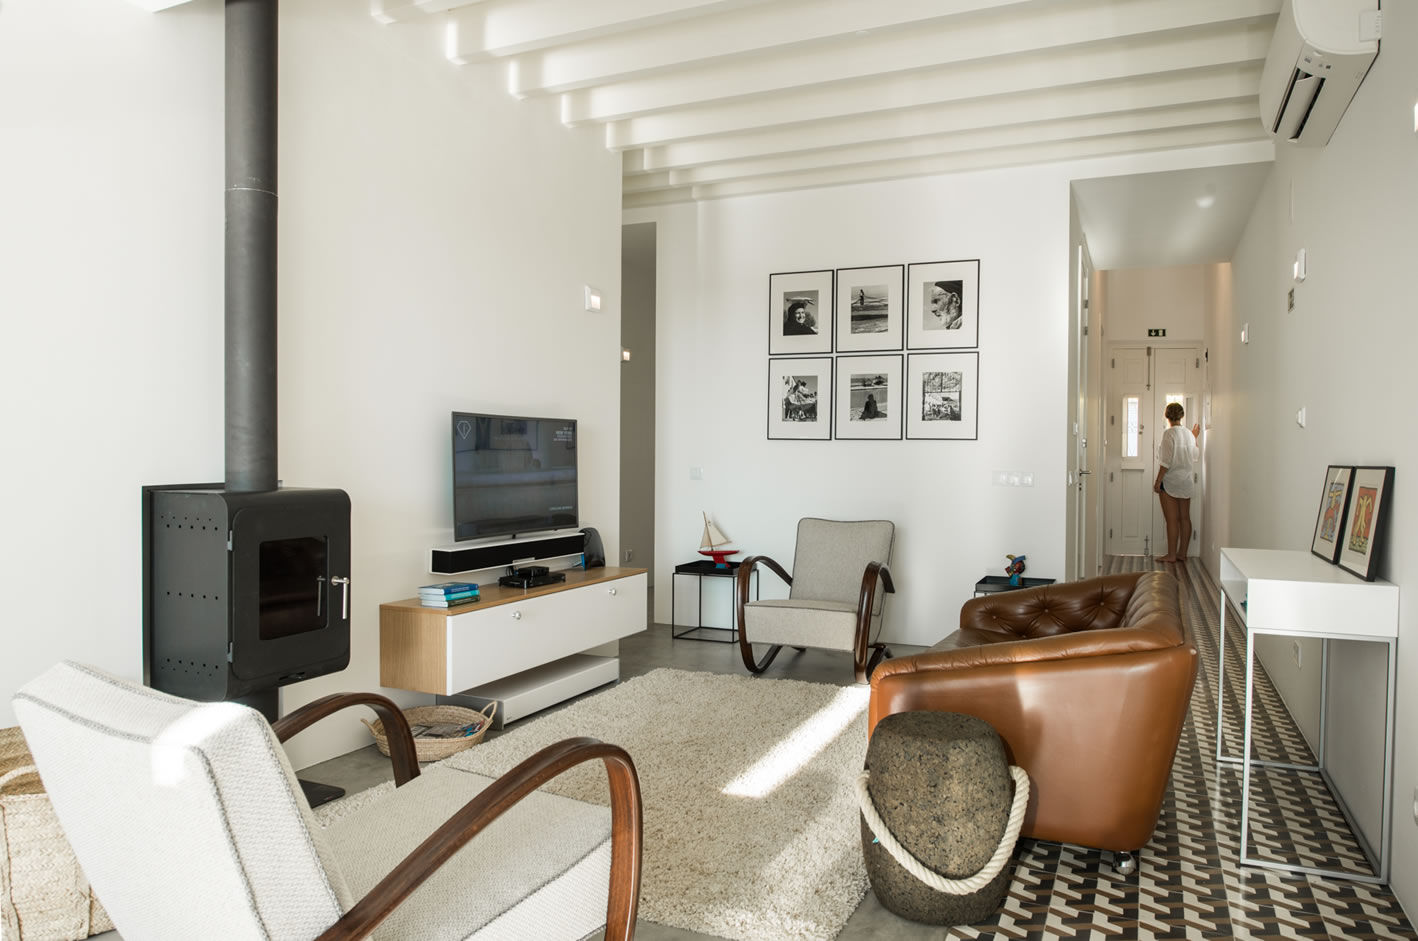 Livingroom StudioArte Salas de estilo minimalista living,vintage furniture,tiles